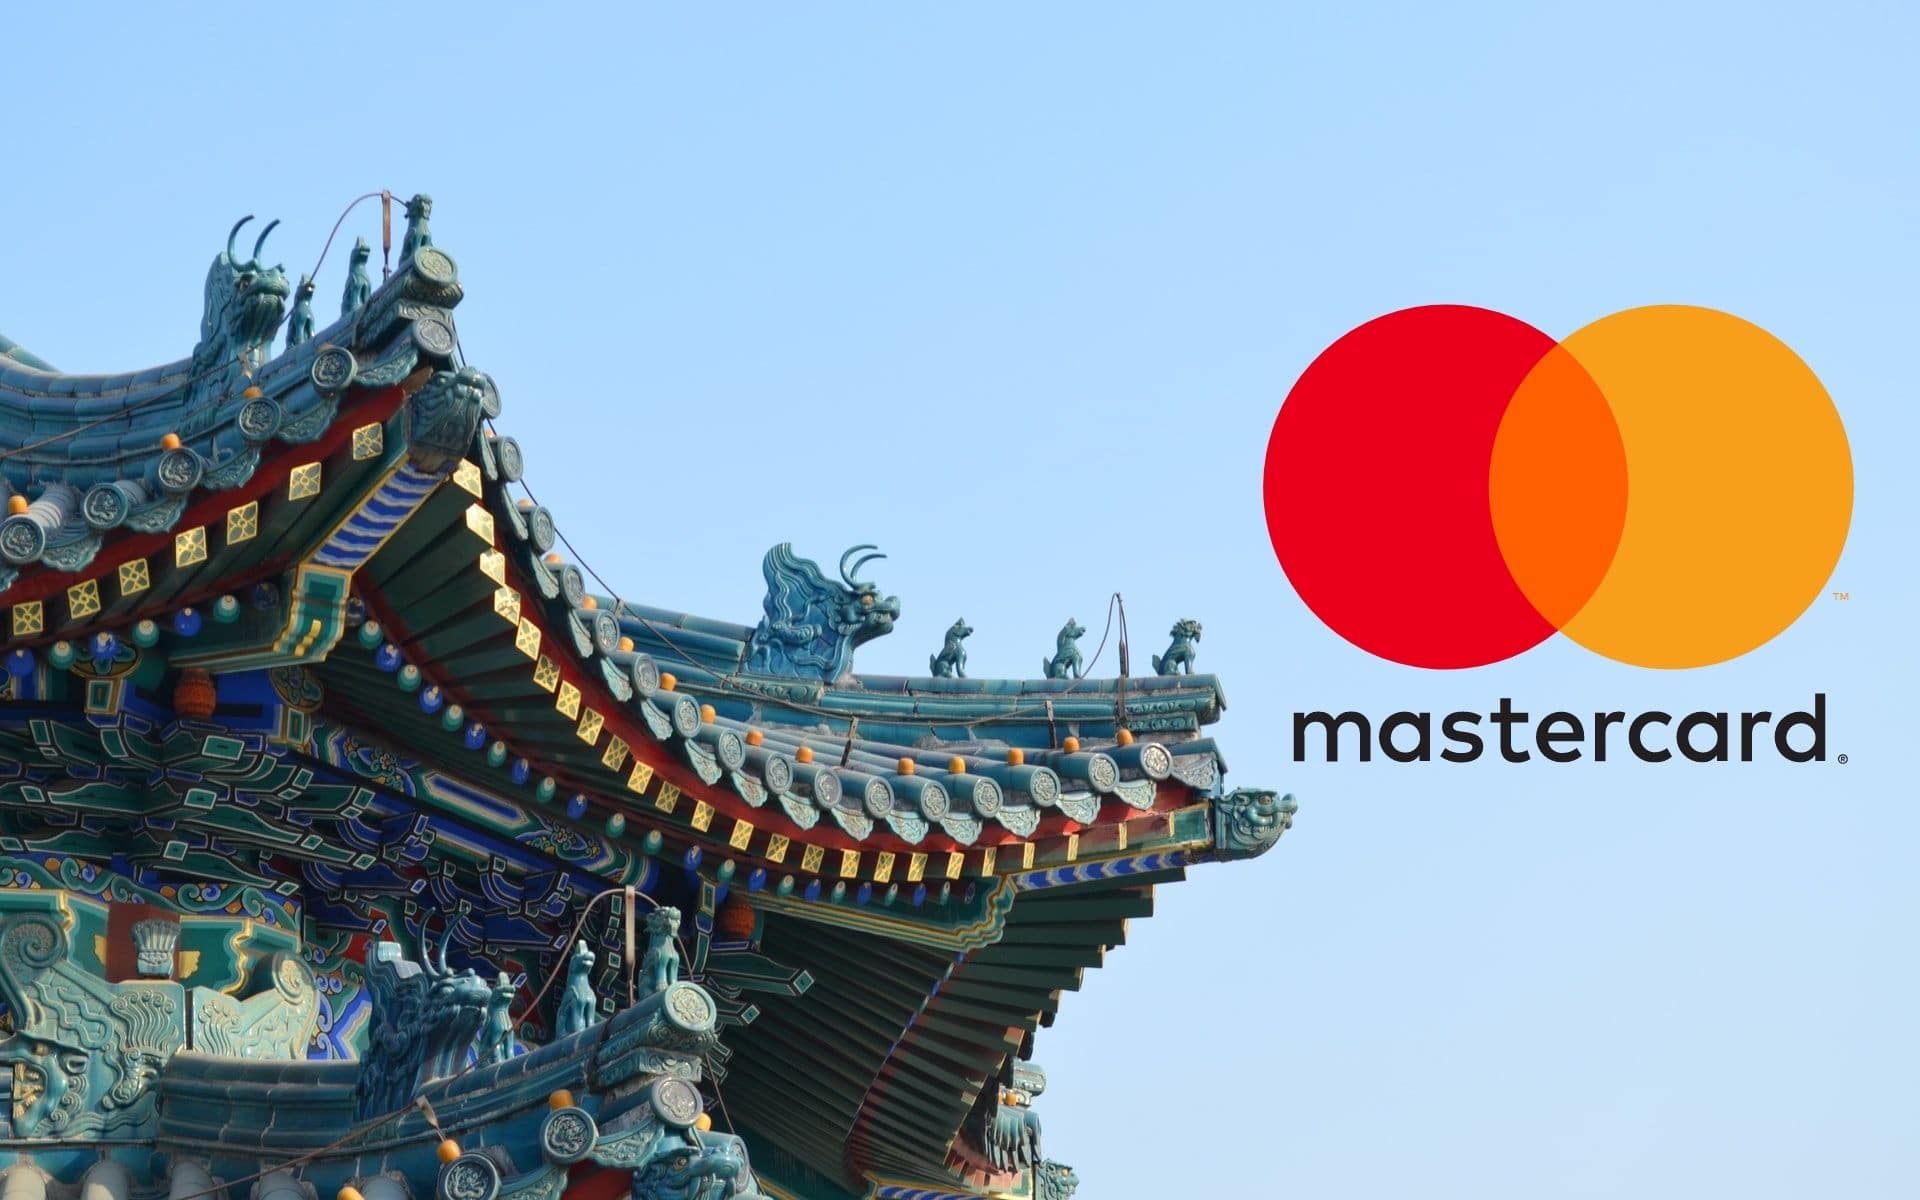 china-mastercard-unsplash-canva